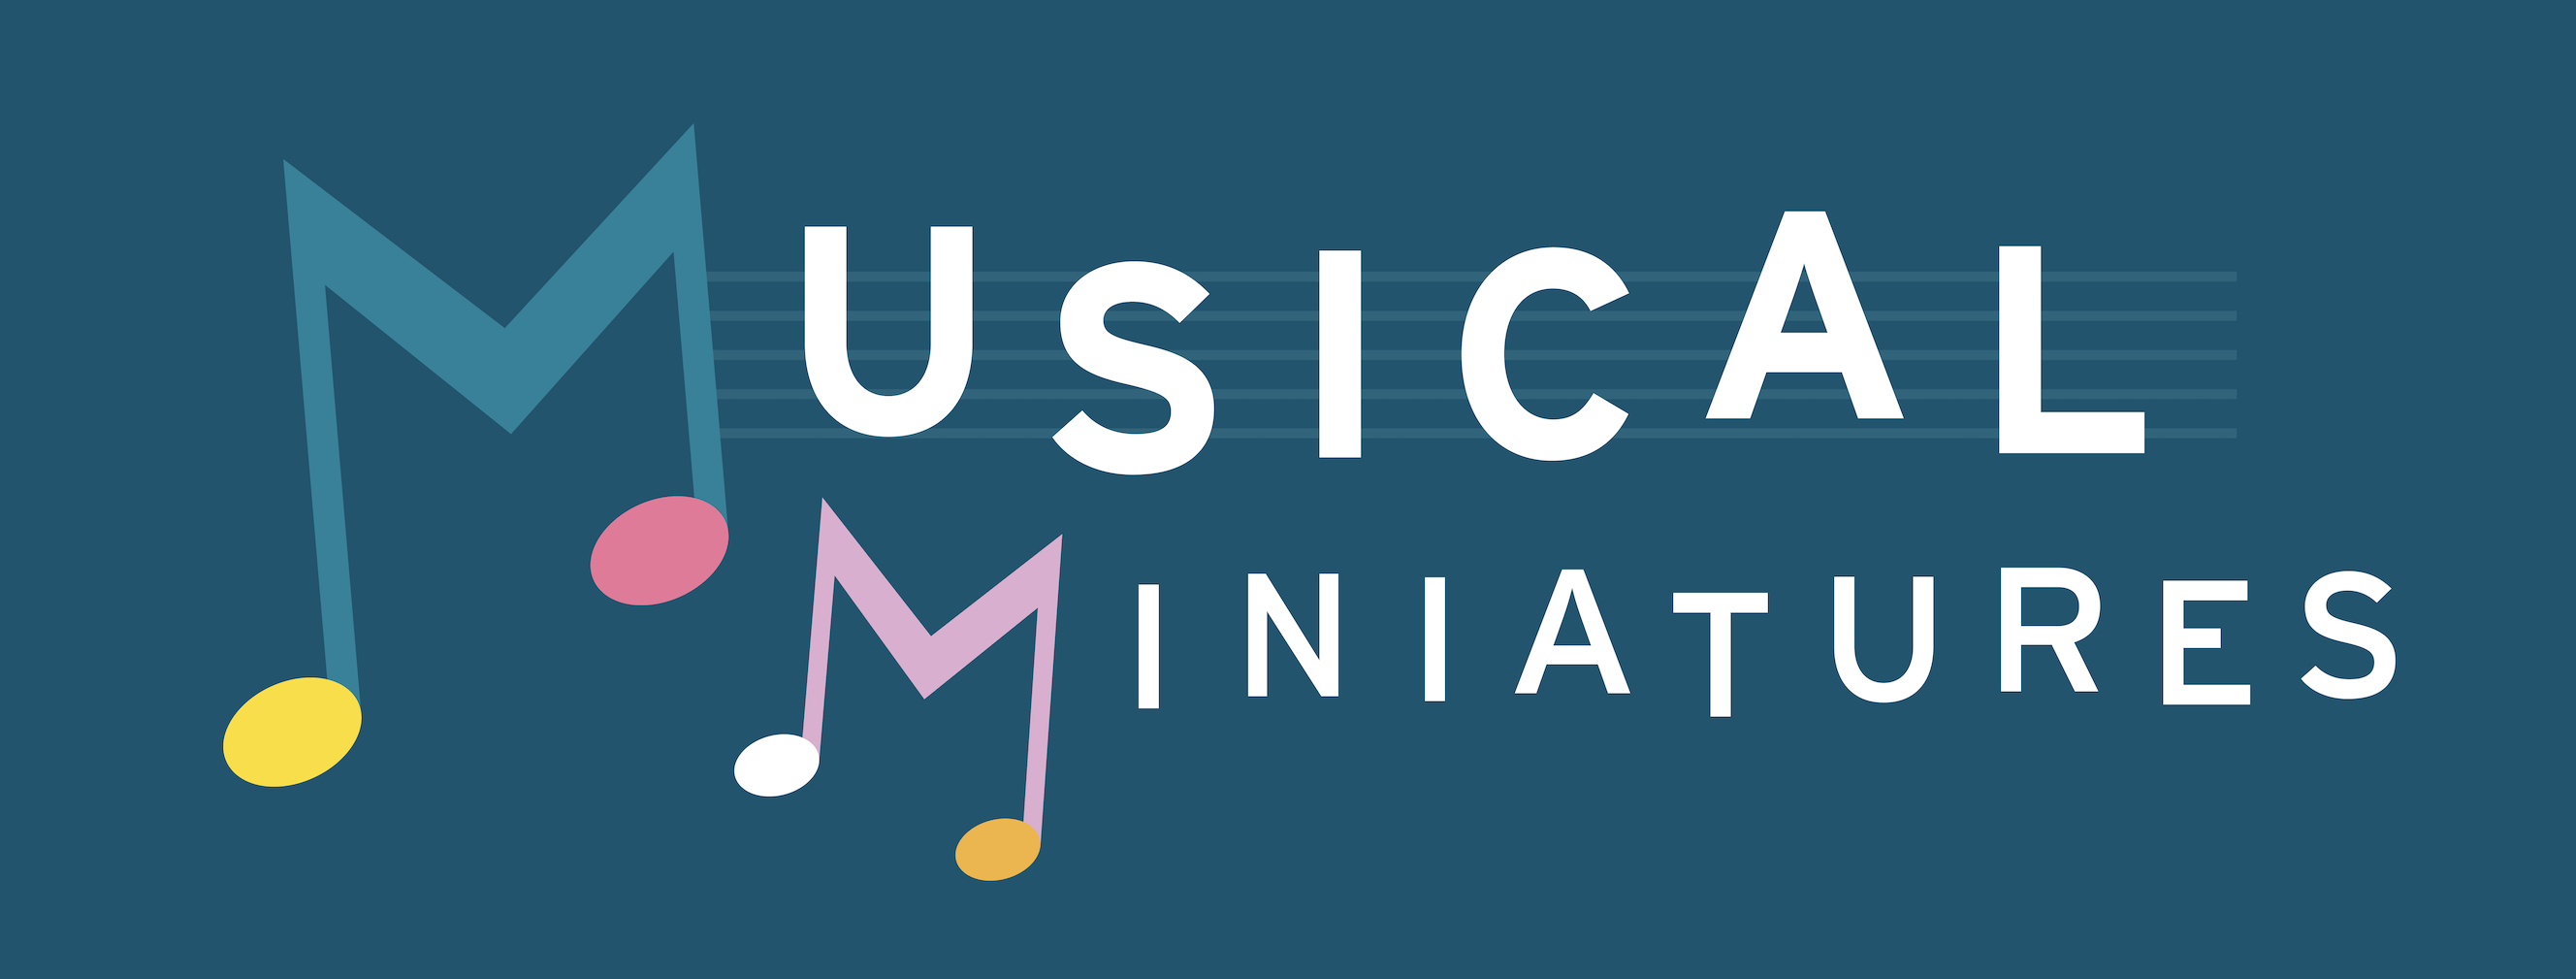 Musical Miniatures's logo